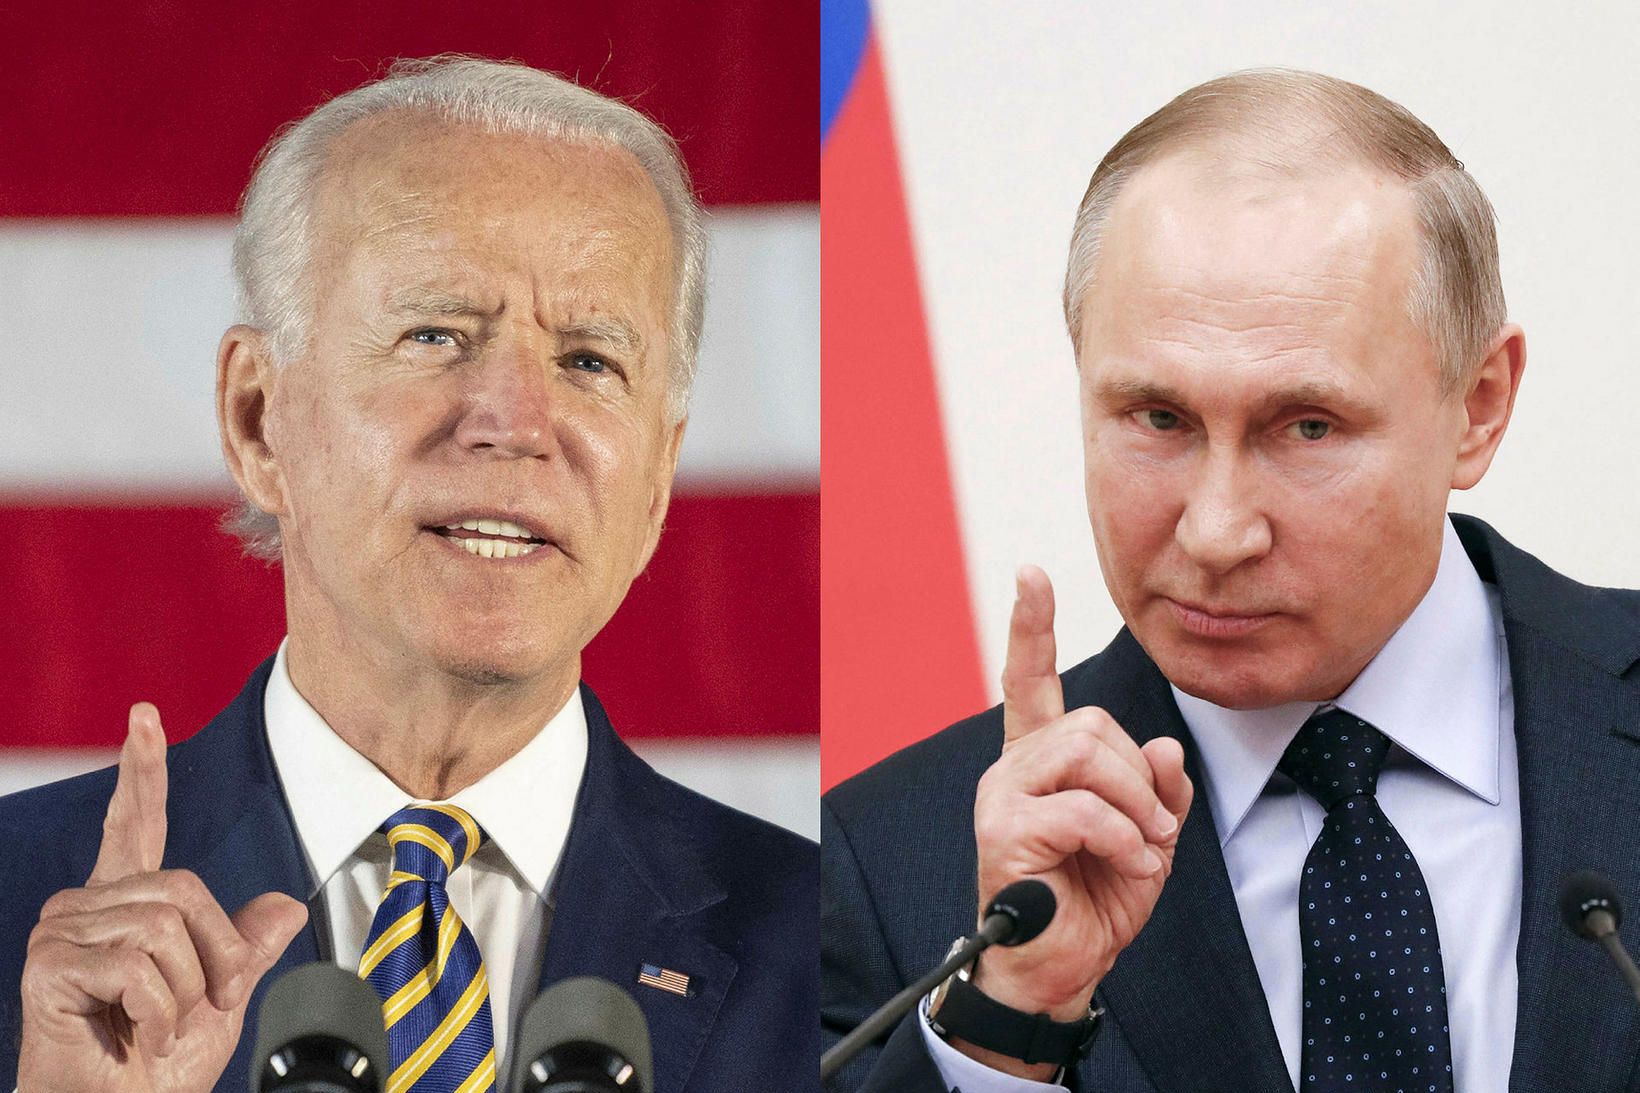 Joe Biden forseti Bandaríkjanna og Vladimír Pútín forseti Rússlands ætla …